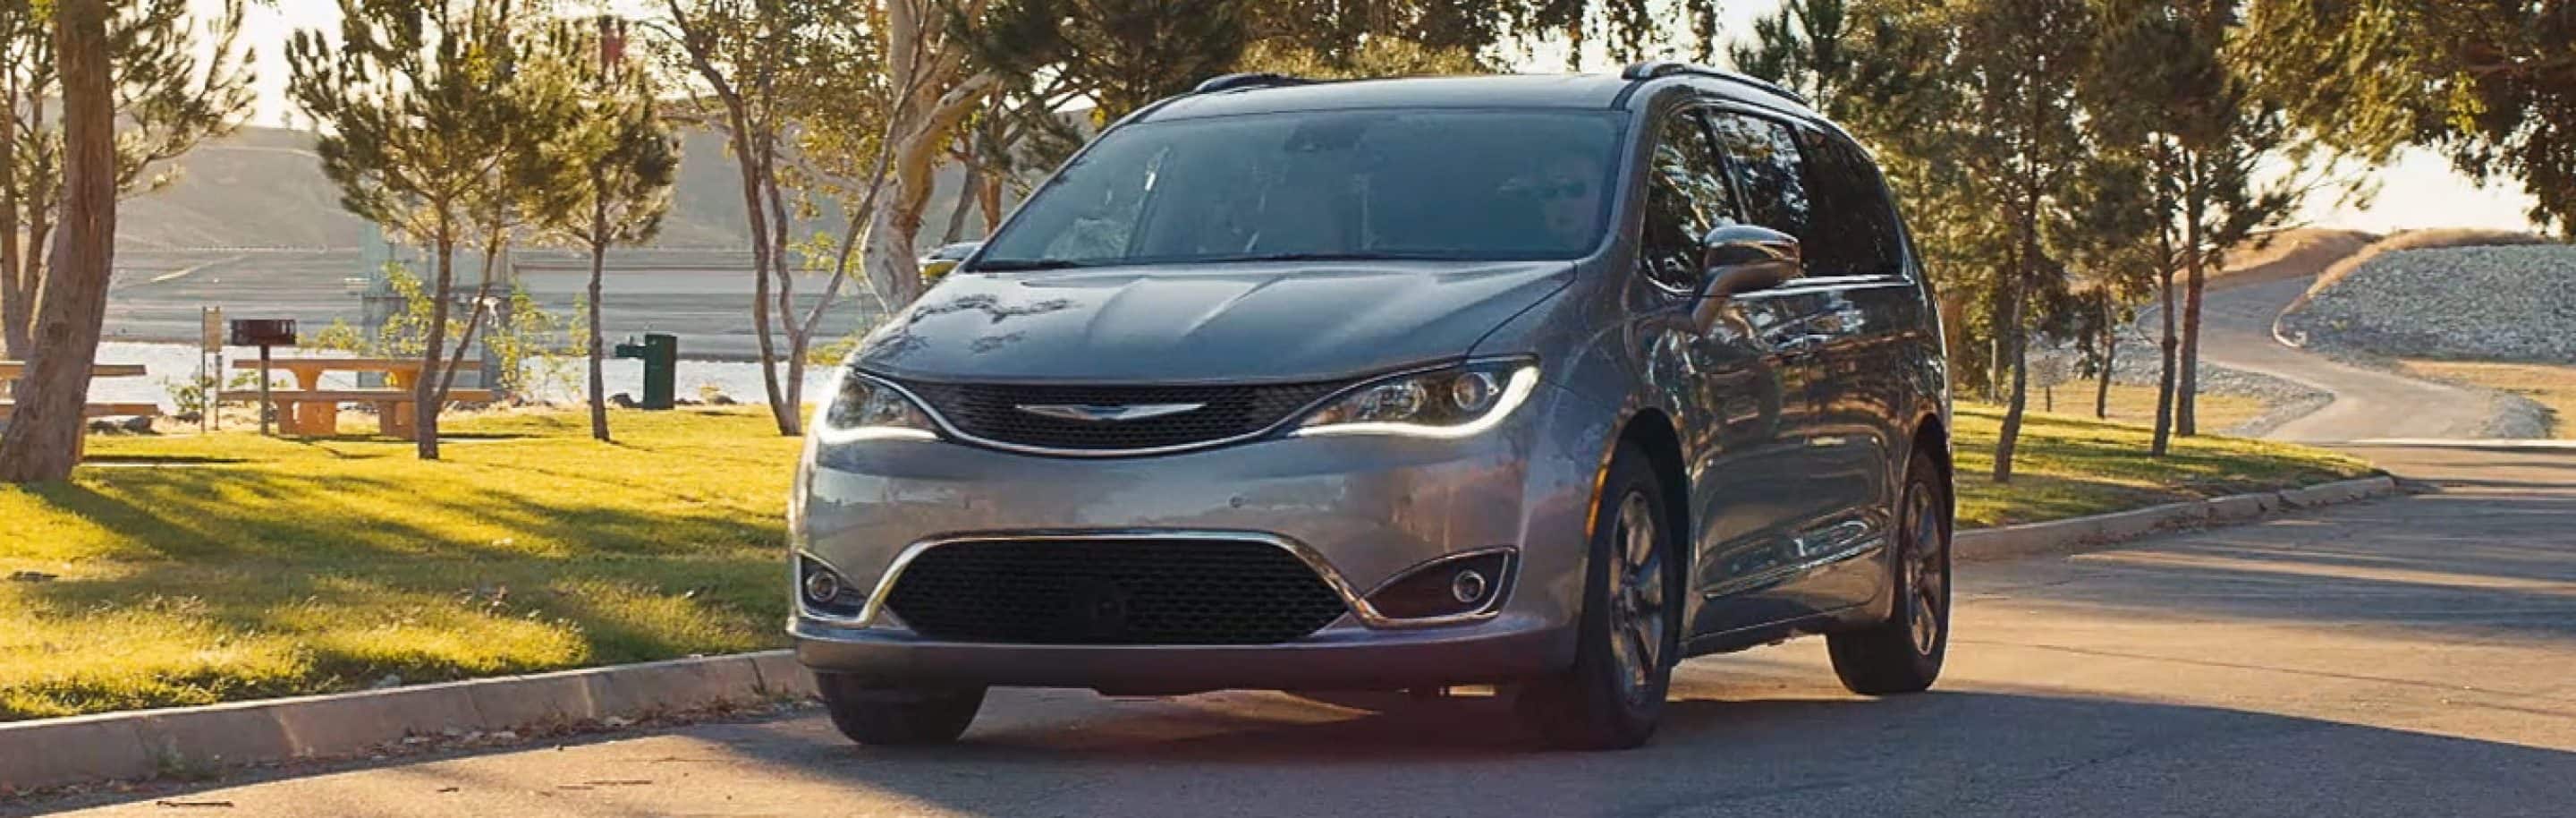 2020 ChryslerVoyager